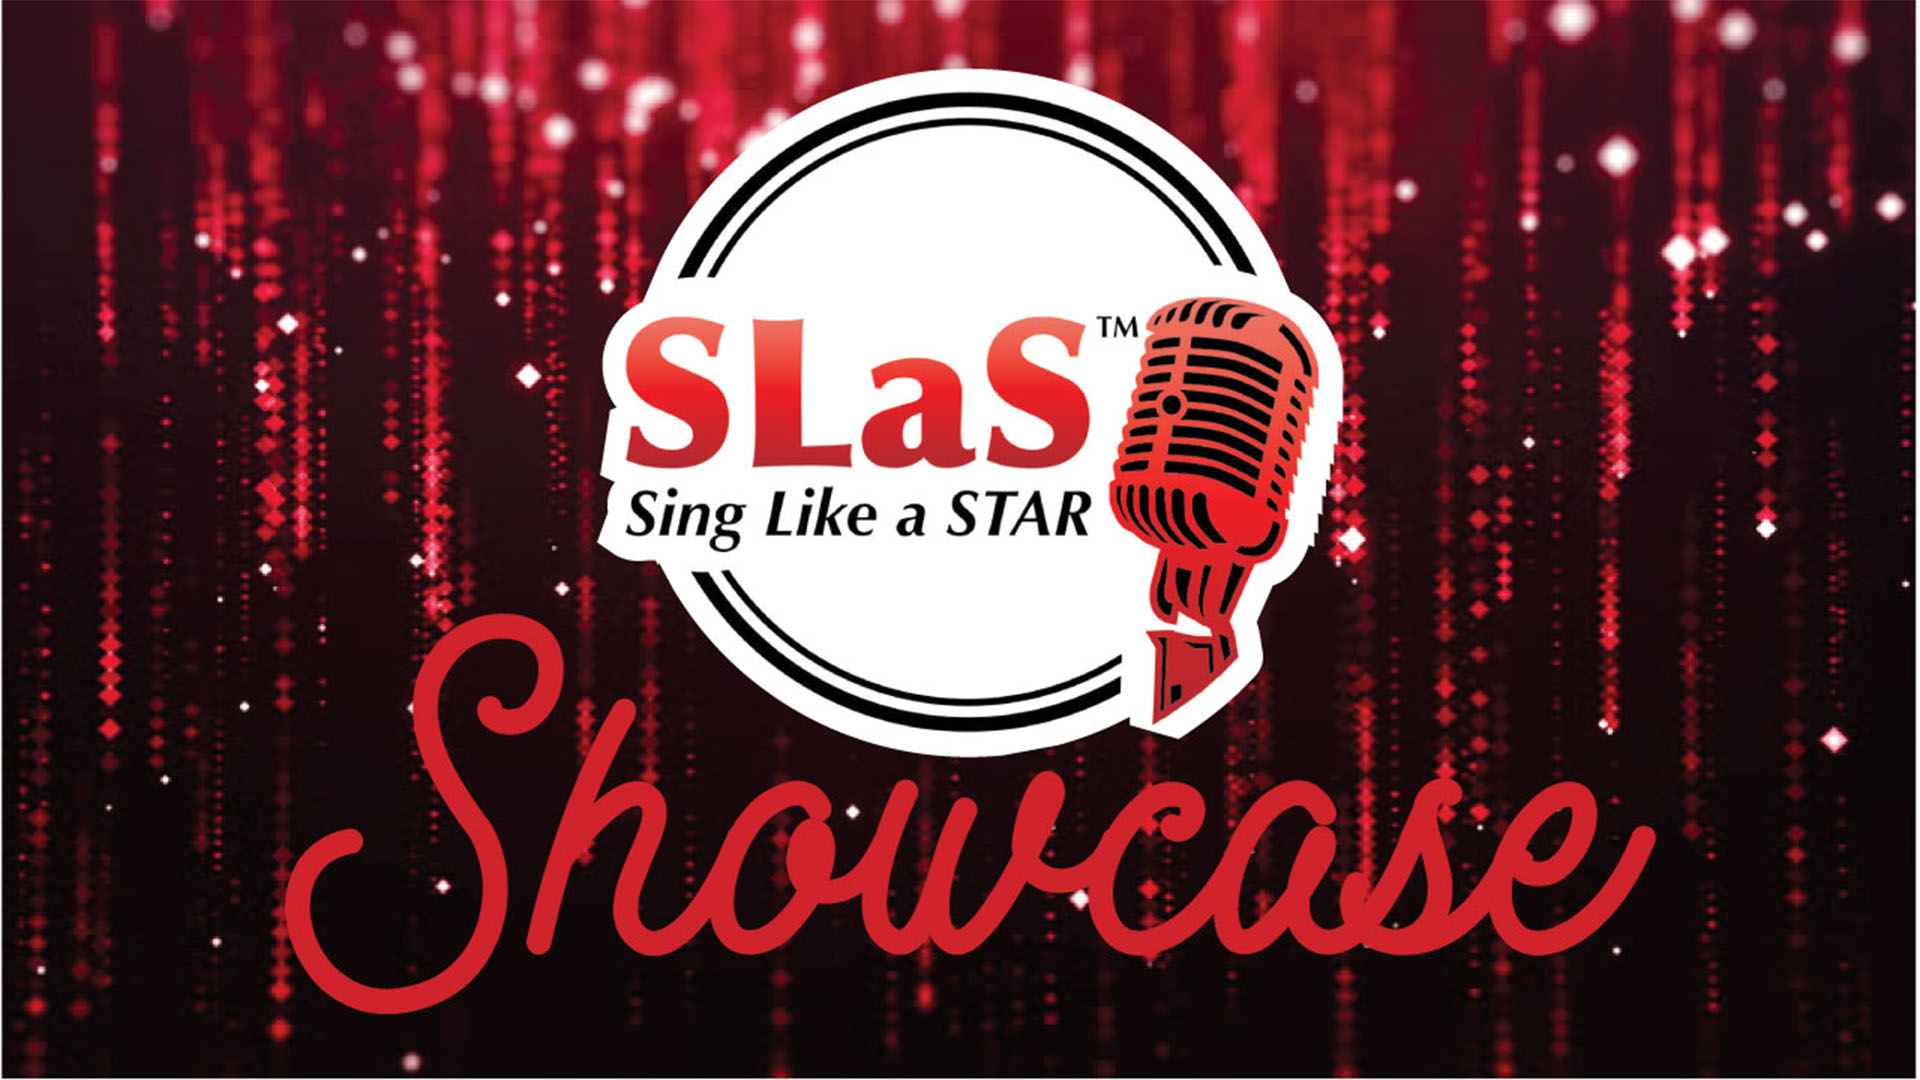 Slas sing like a star showcase.